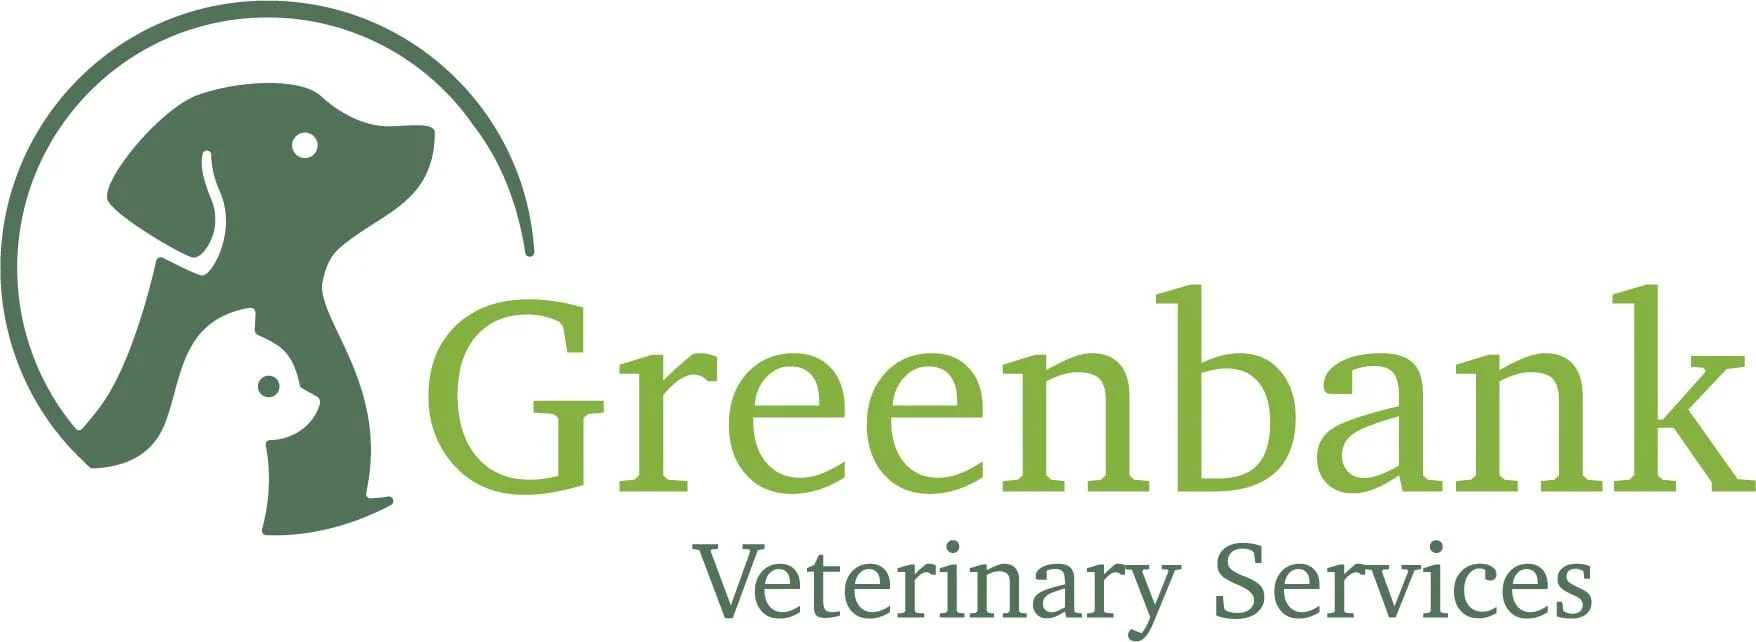 Greenbank Veterinary Services